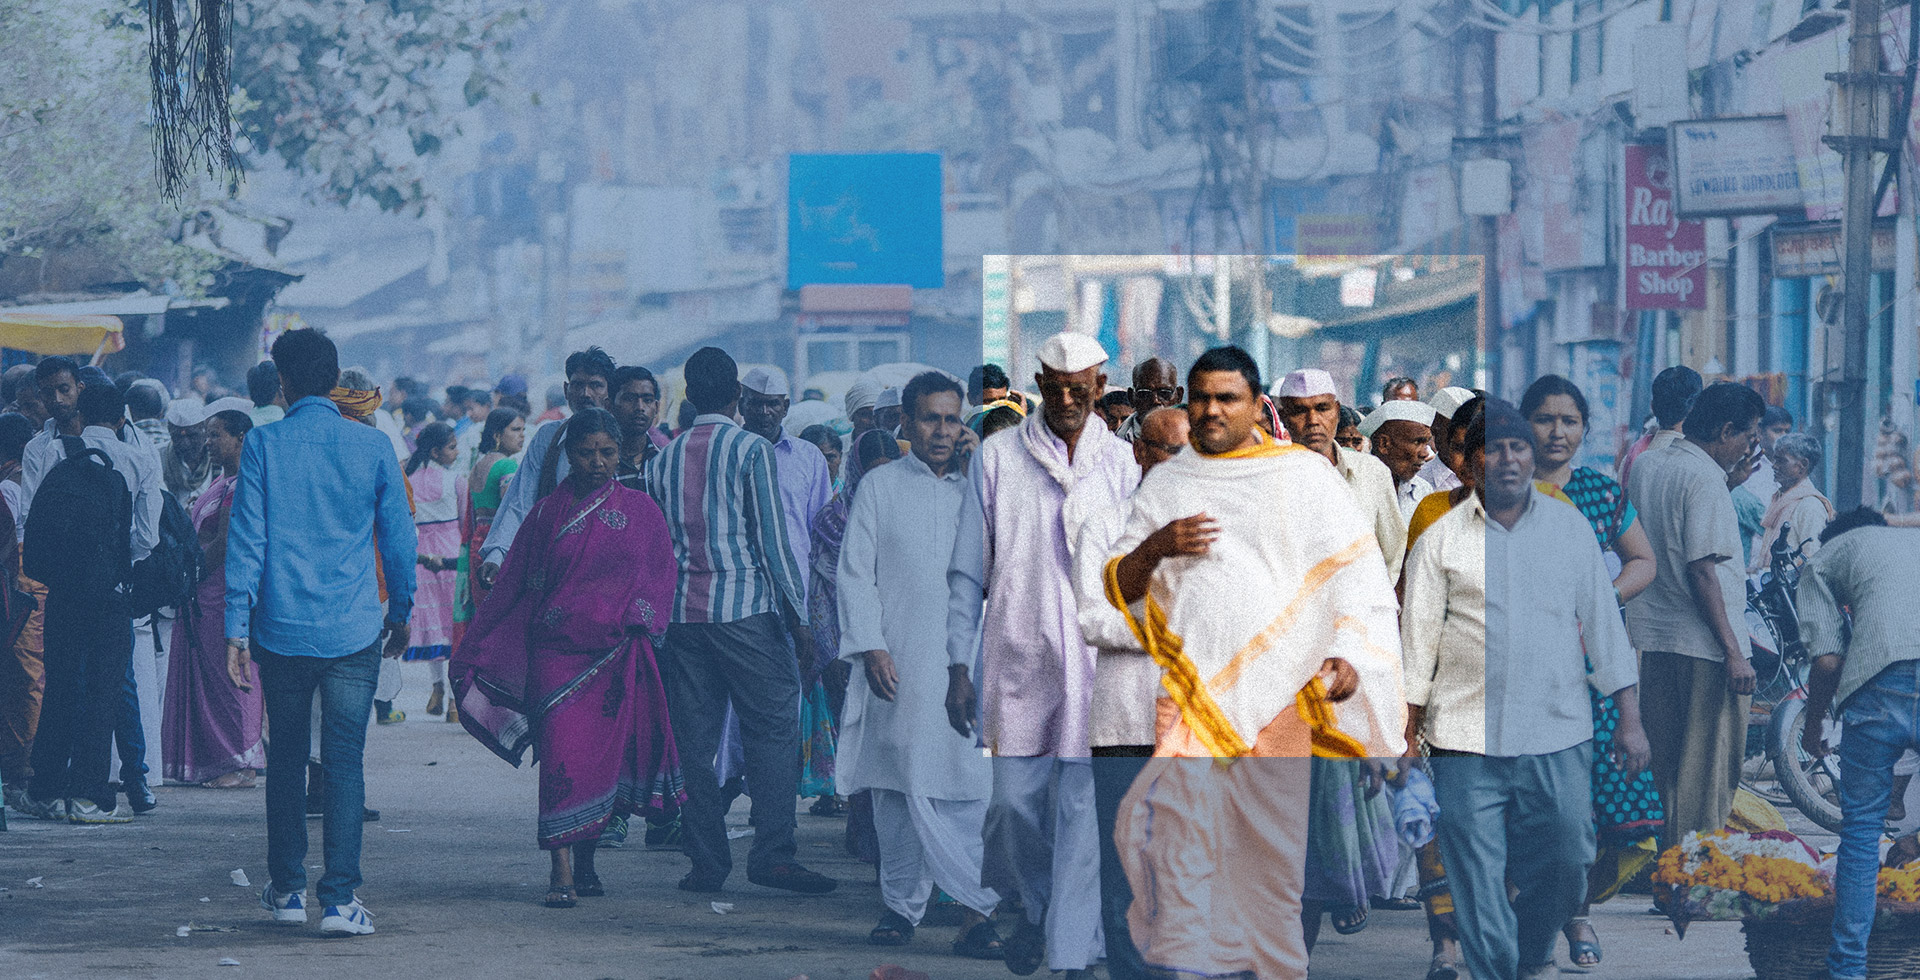 A crowd walks on a street in Varanasi, India